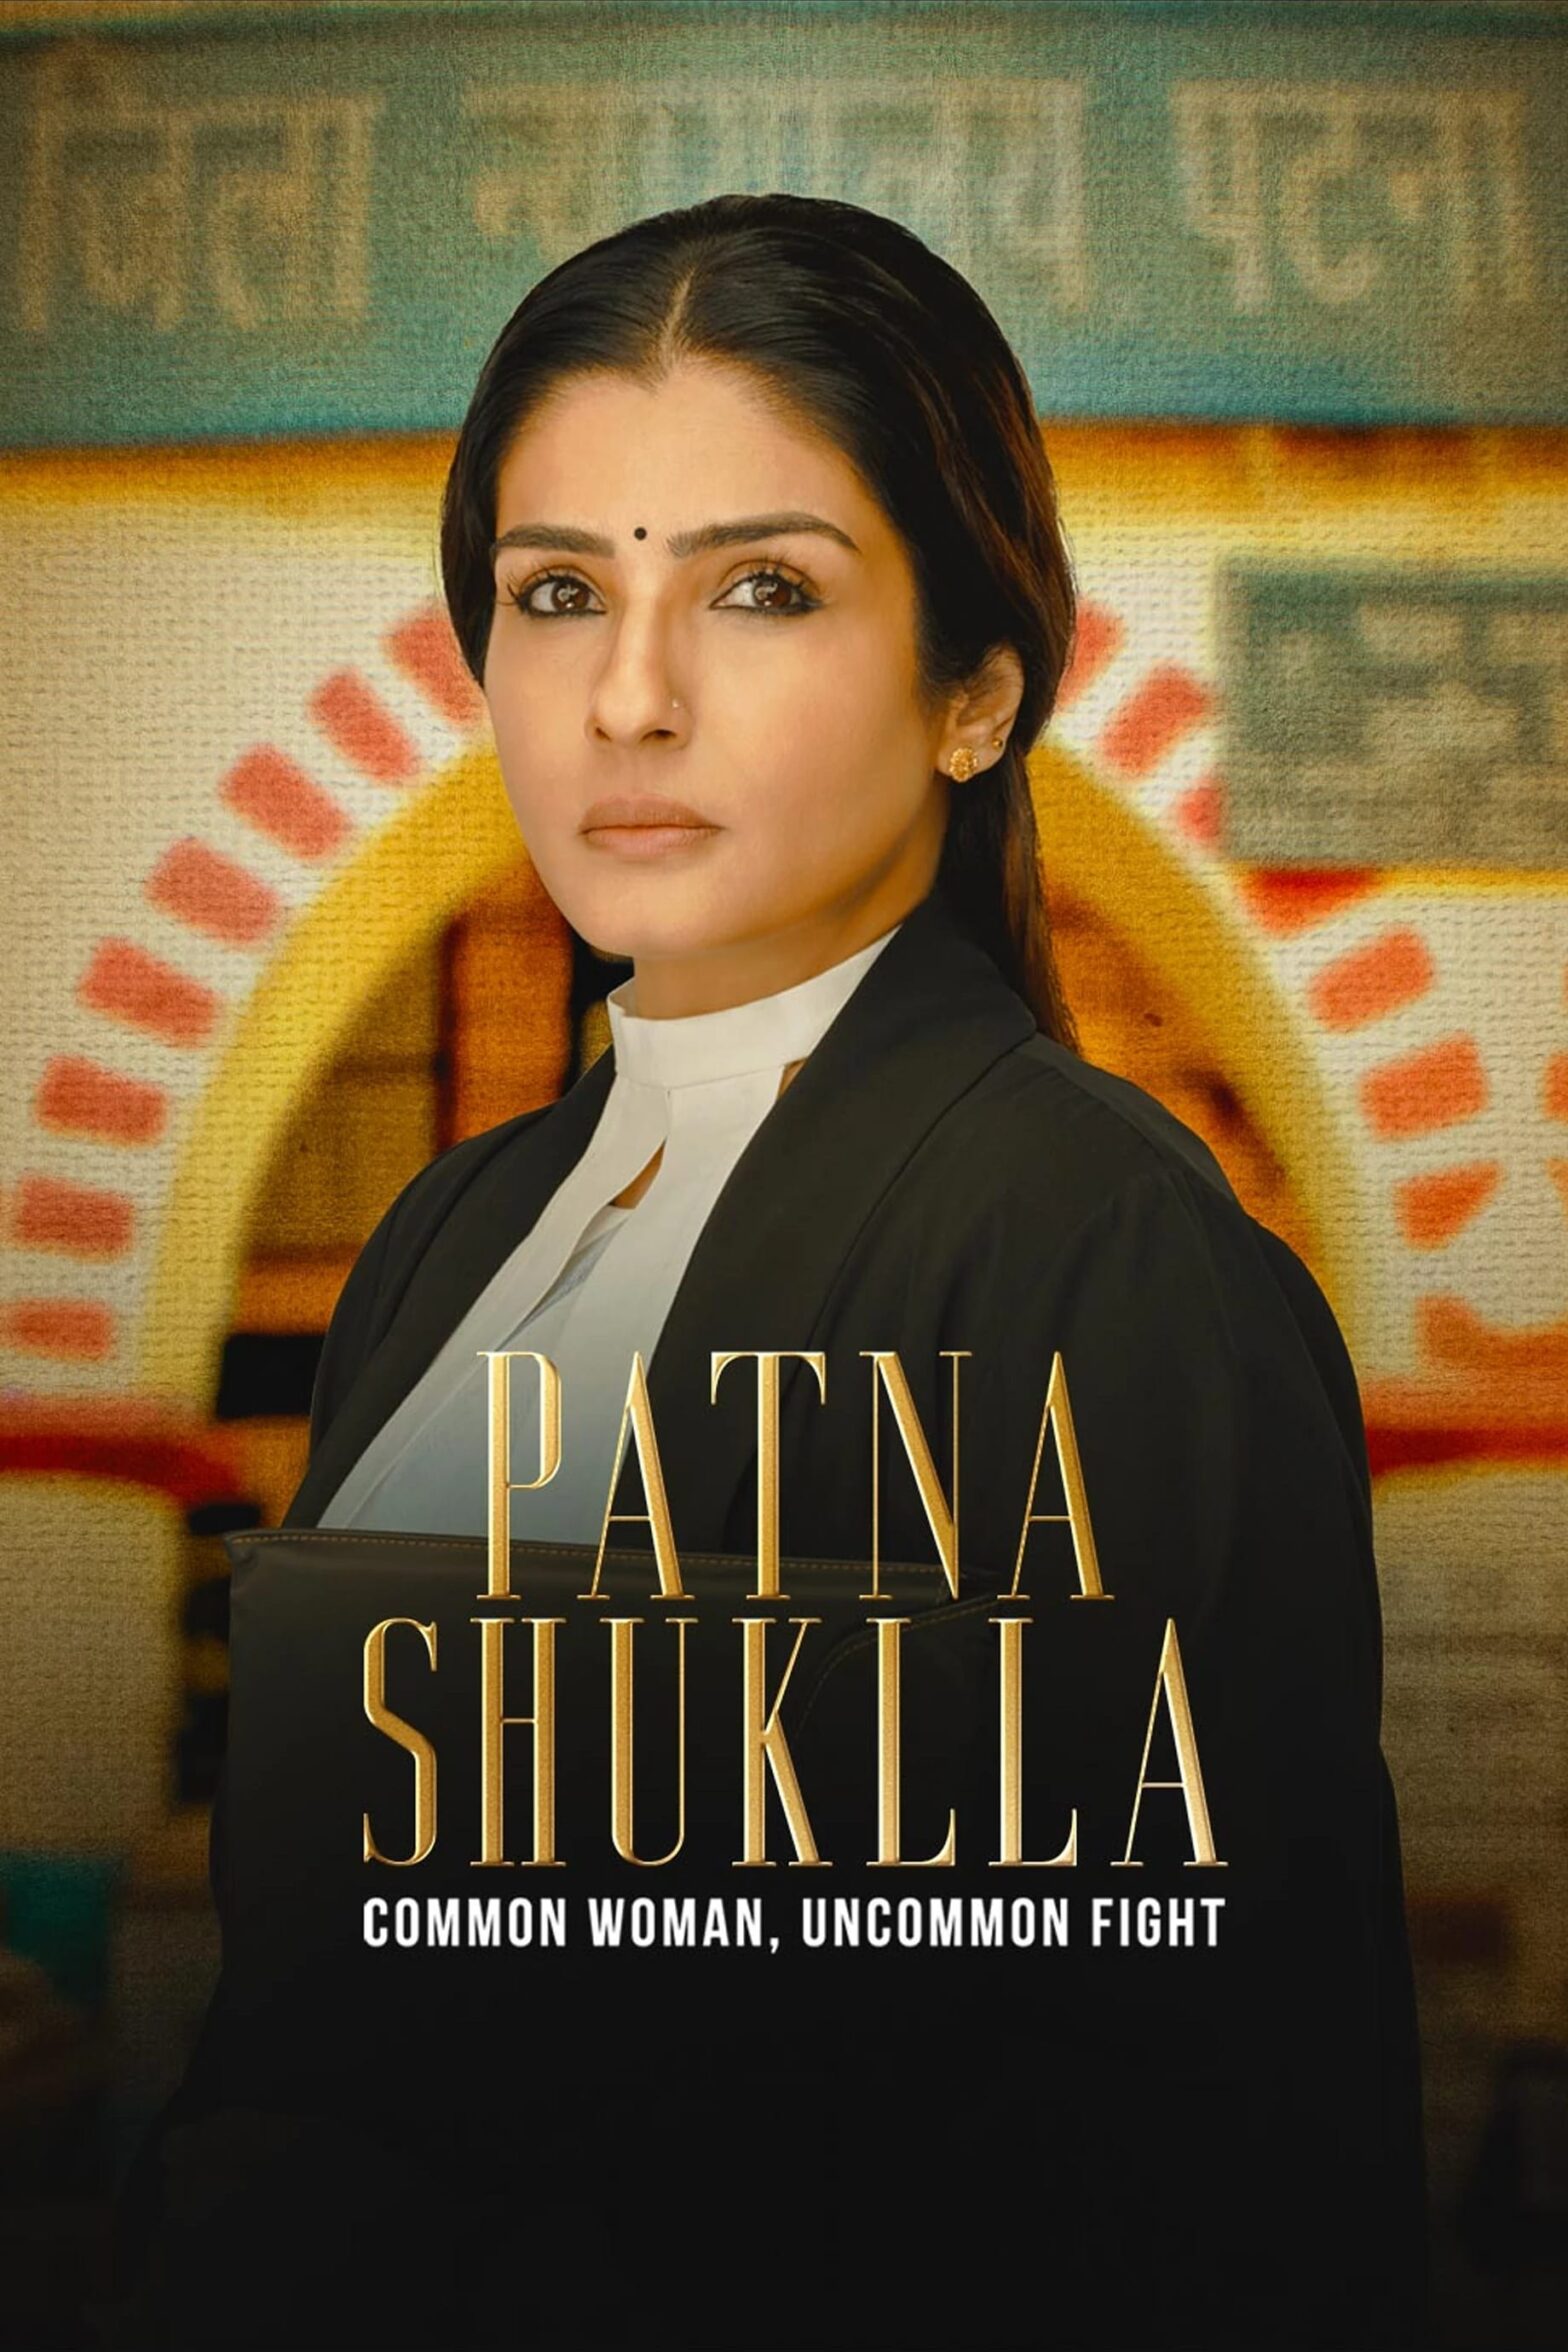 Poster for the movie "Patna Shukla"